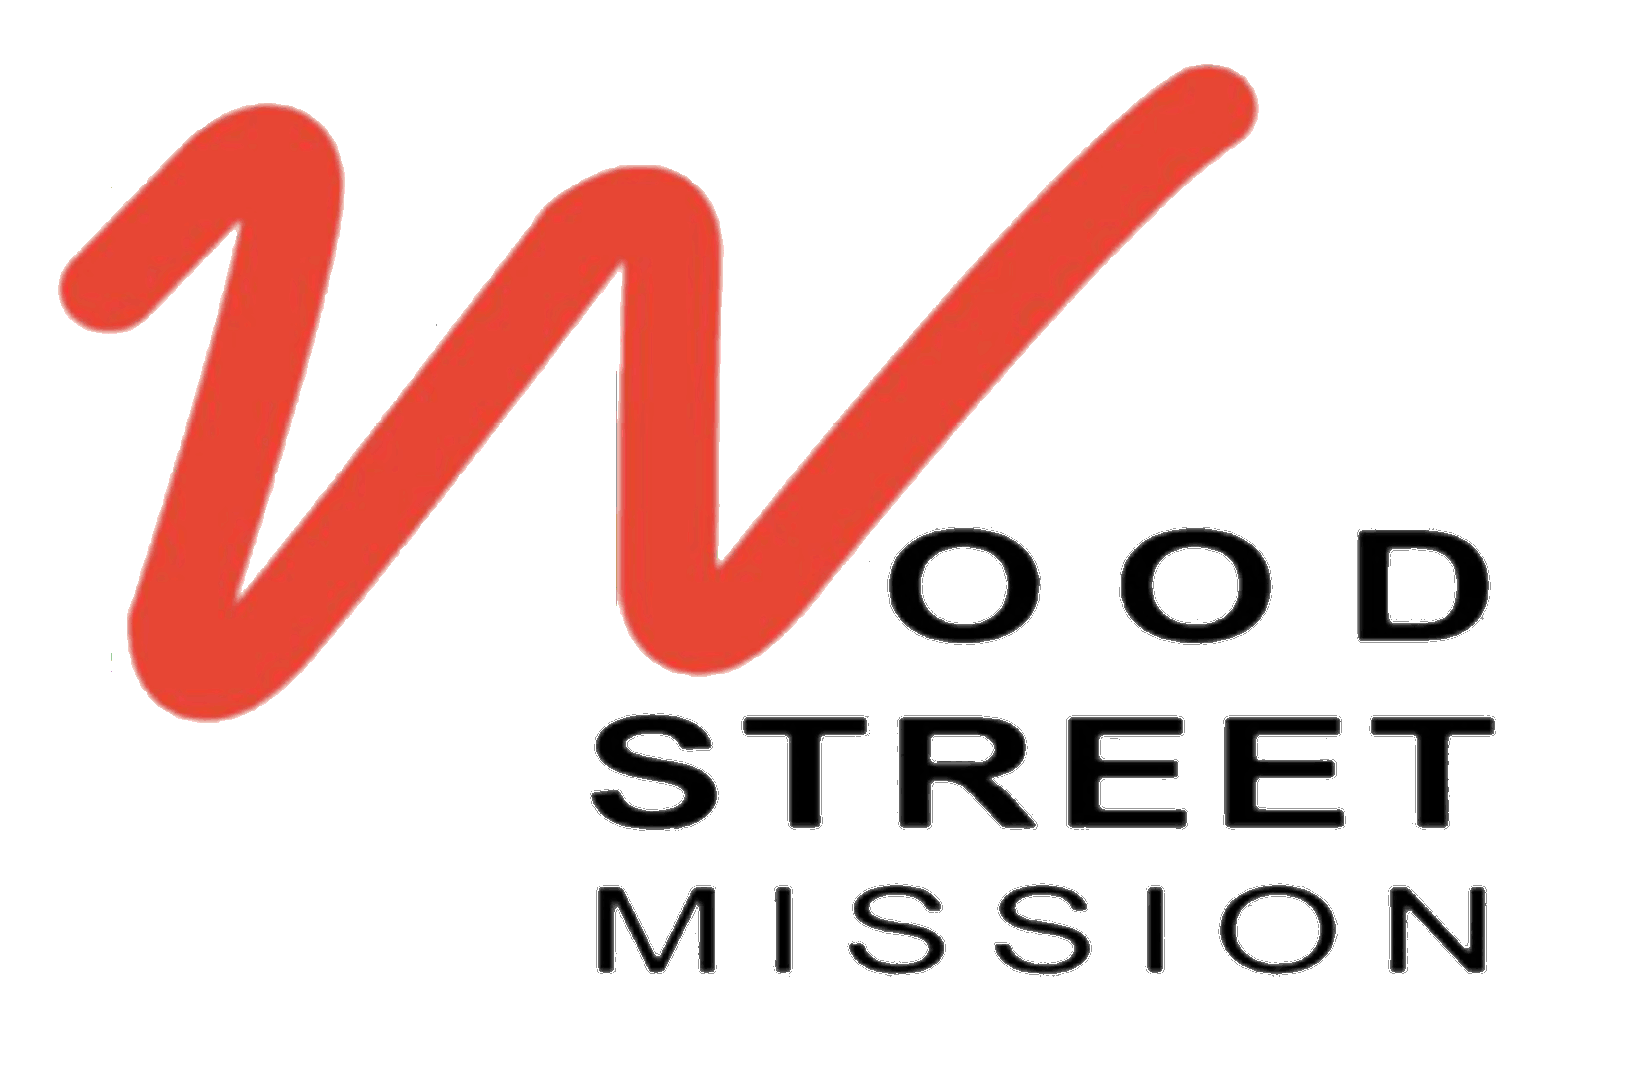 Mission Logo - wood street mission logo